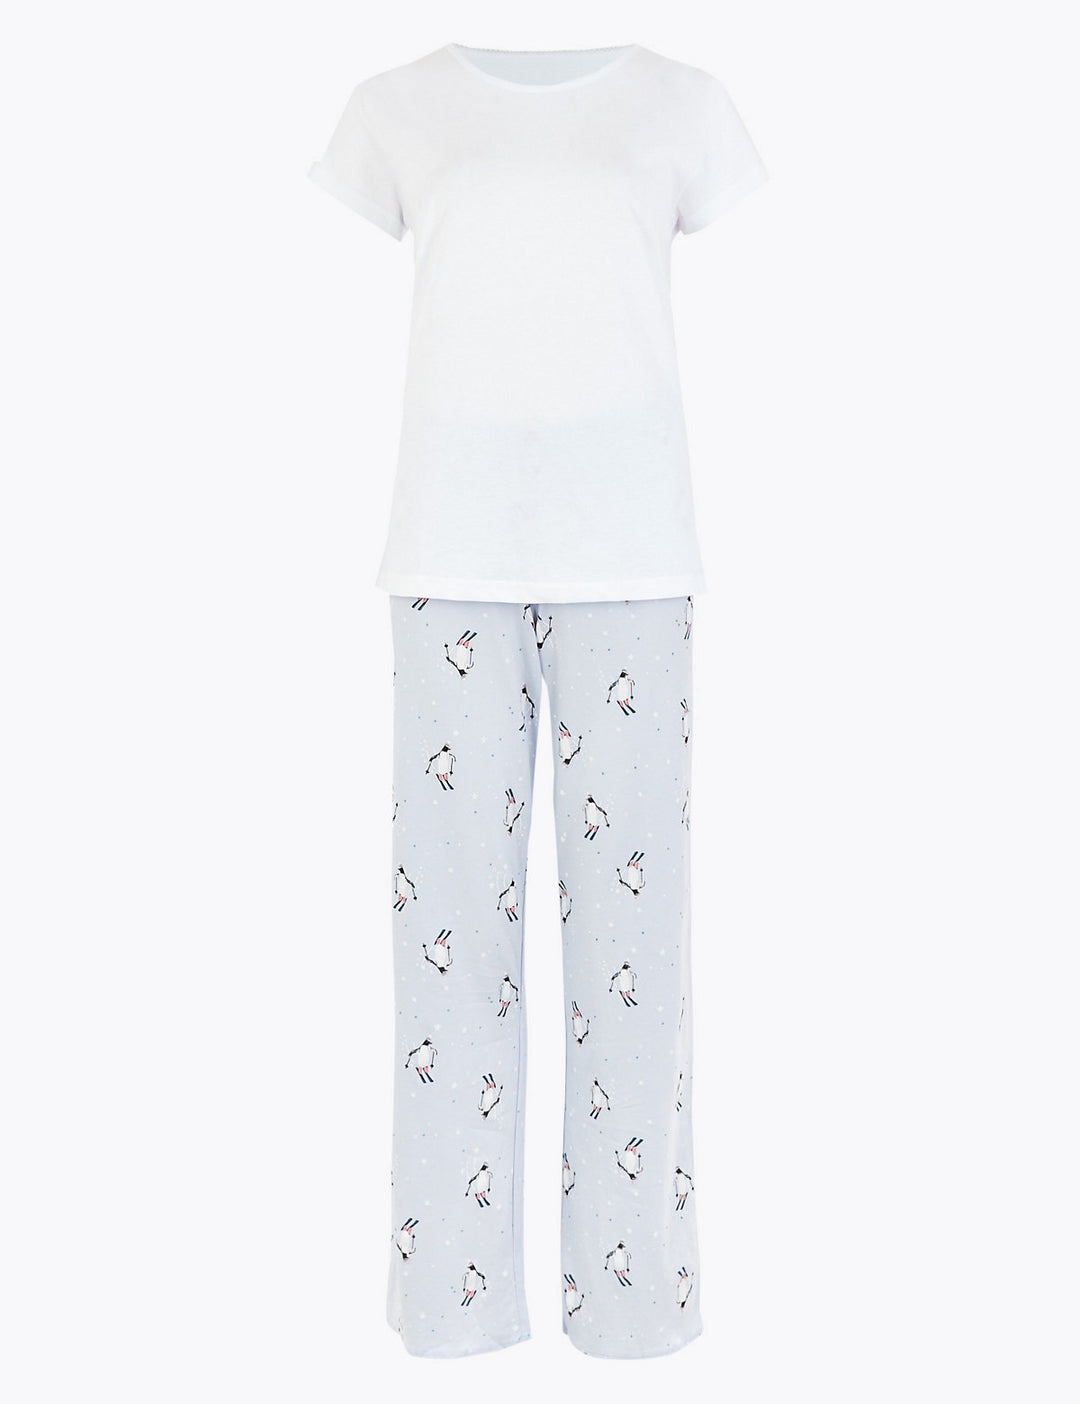 Marks & Spencer Ladies Night Pajama Suit T37/4391F